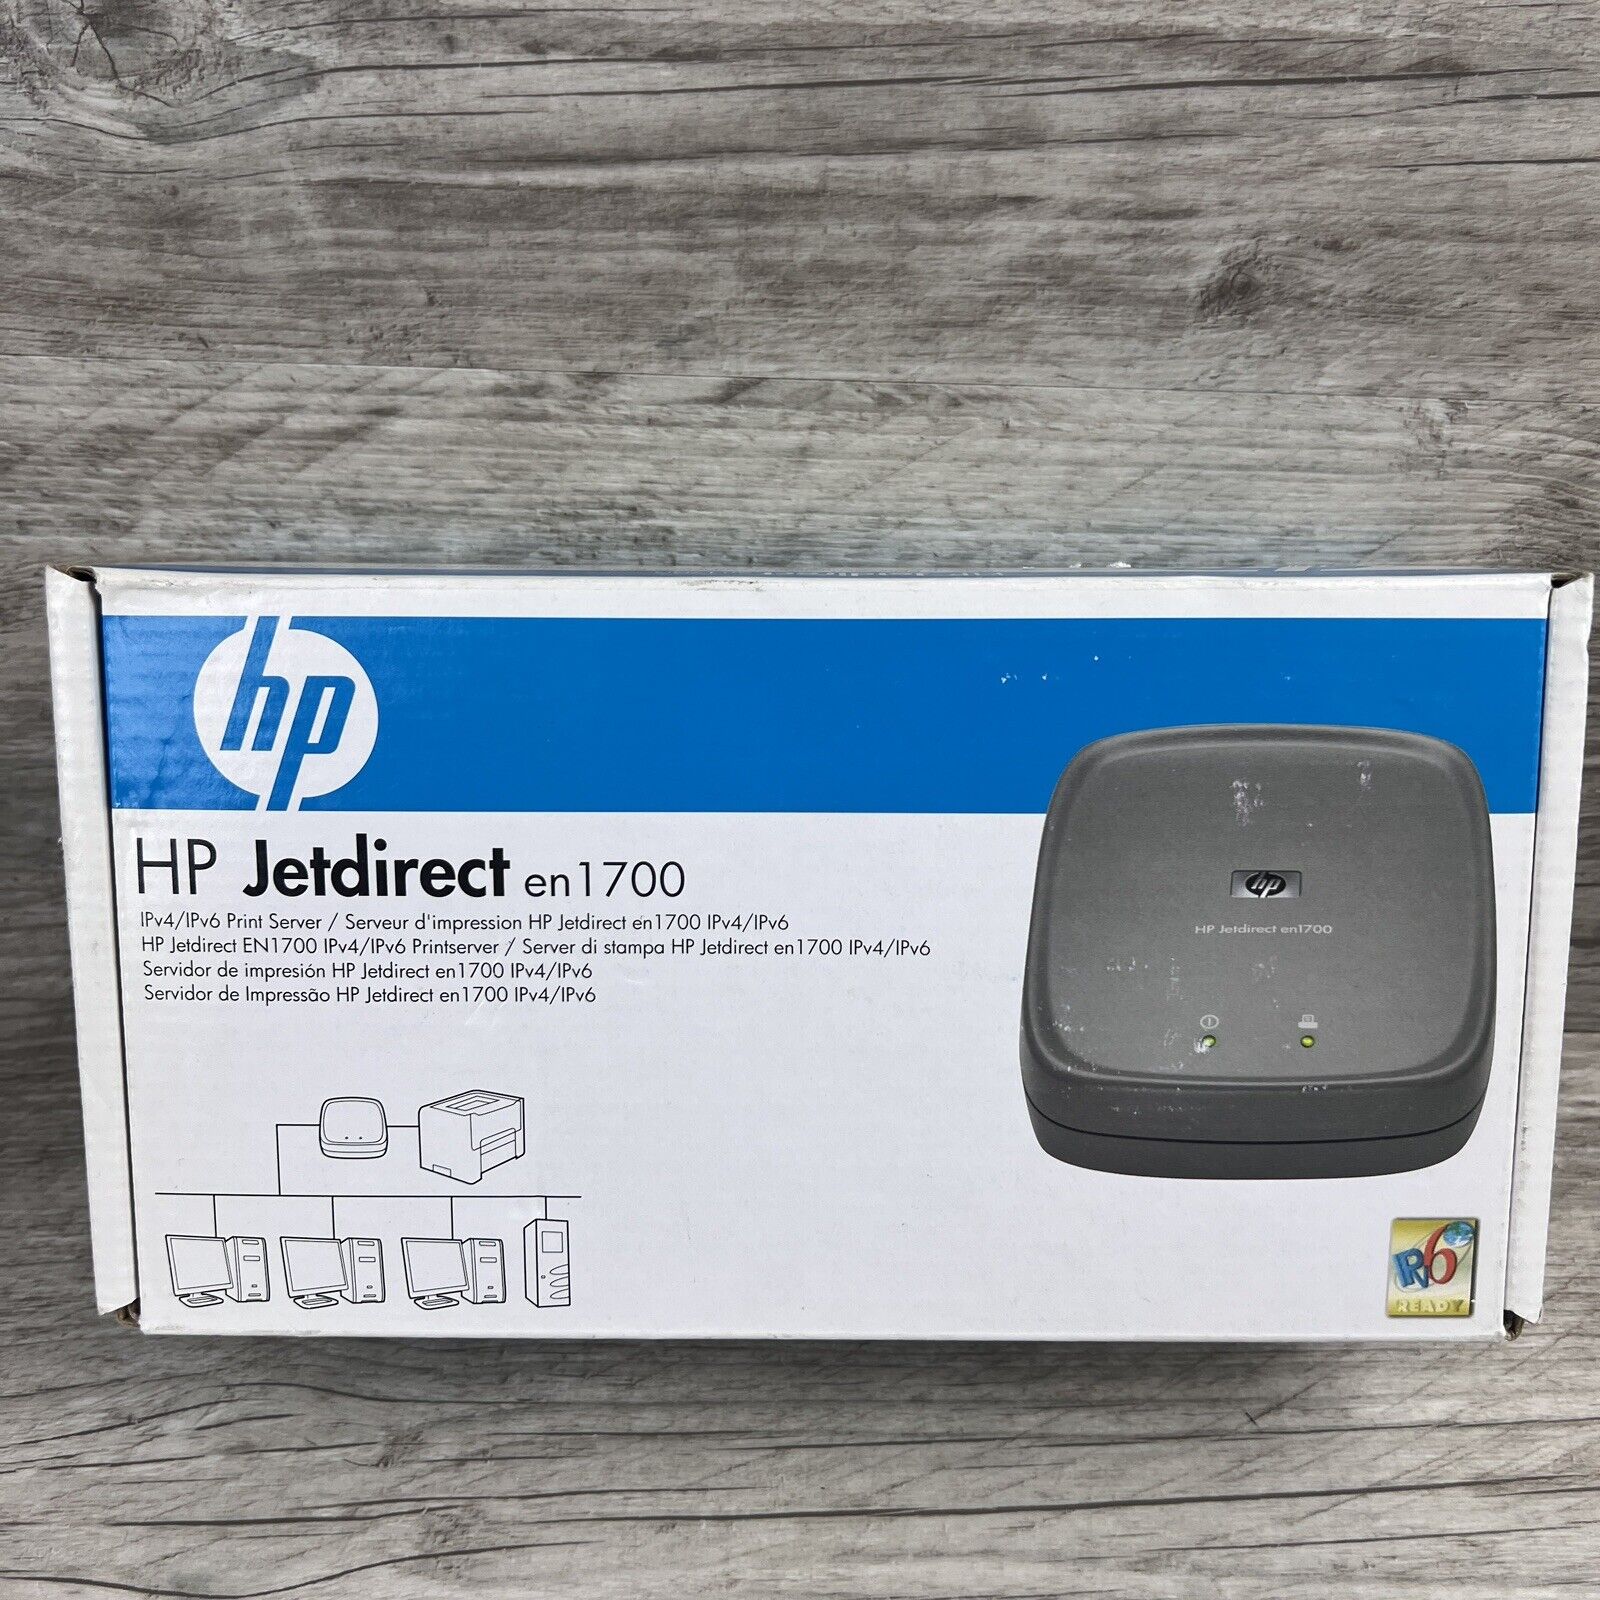 HP J7988G J7988-61002 JetDirect en1700 External Printer Server w/ Original Box